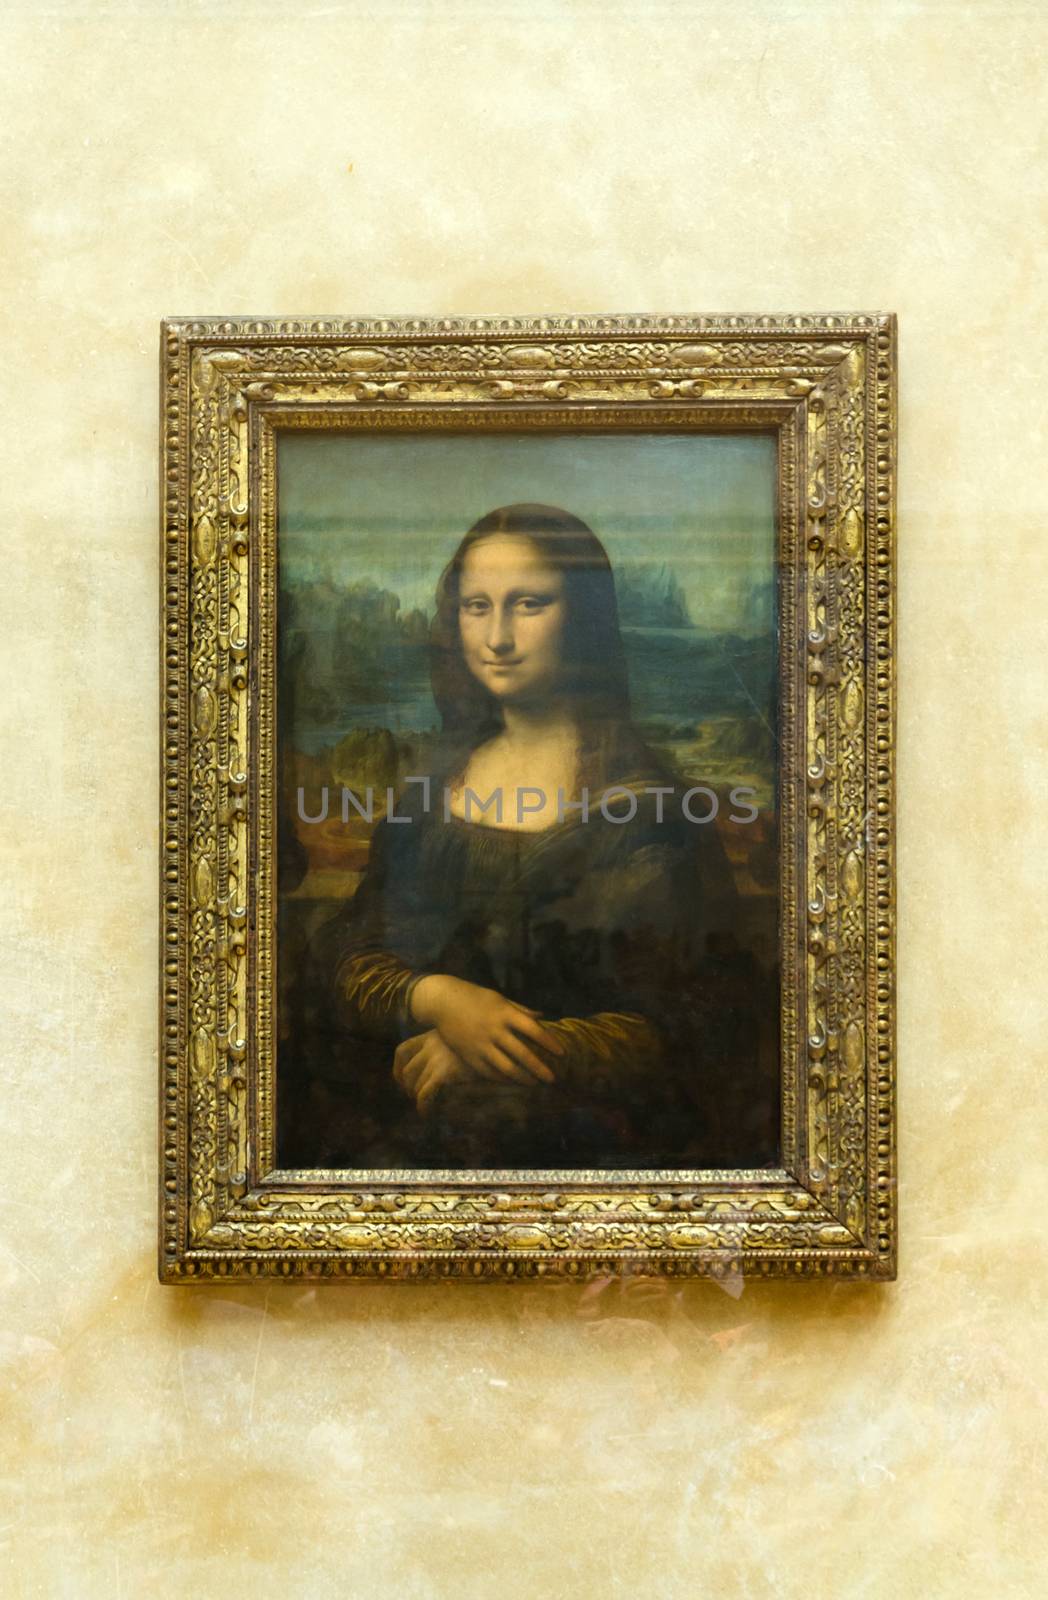 Paris, France - May 13, 2015: Leonardo DaVinci's "Mona Lisa" at Louvre Museum by siraanamwong